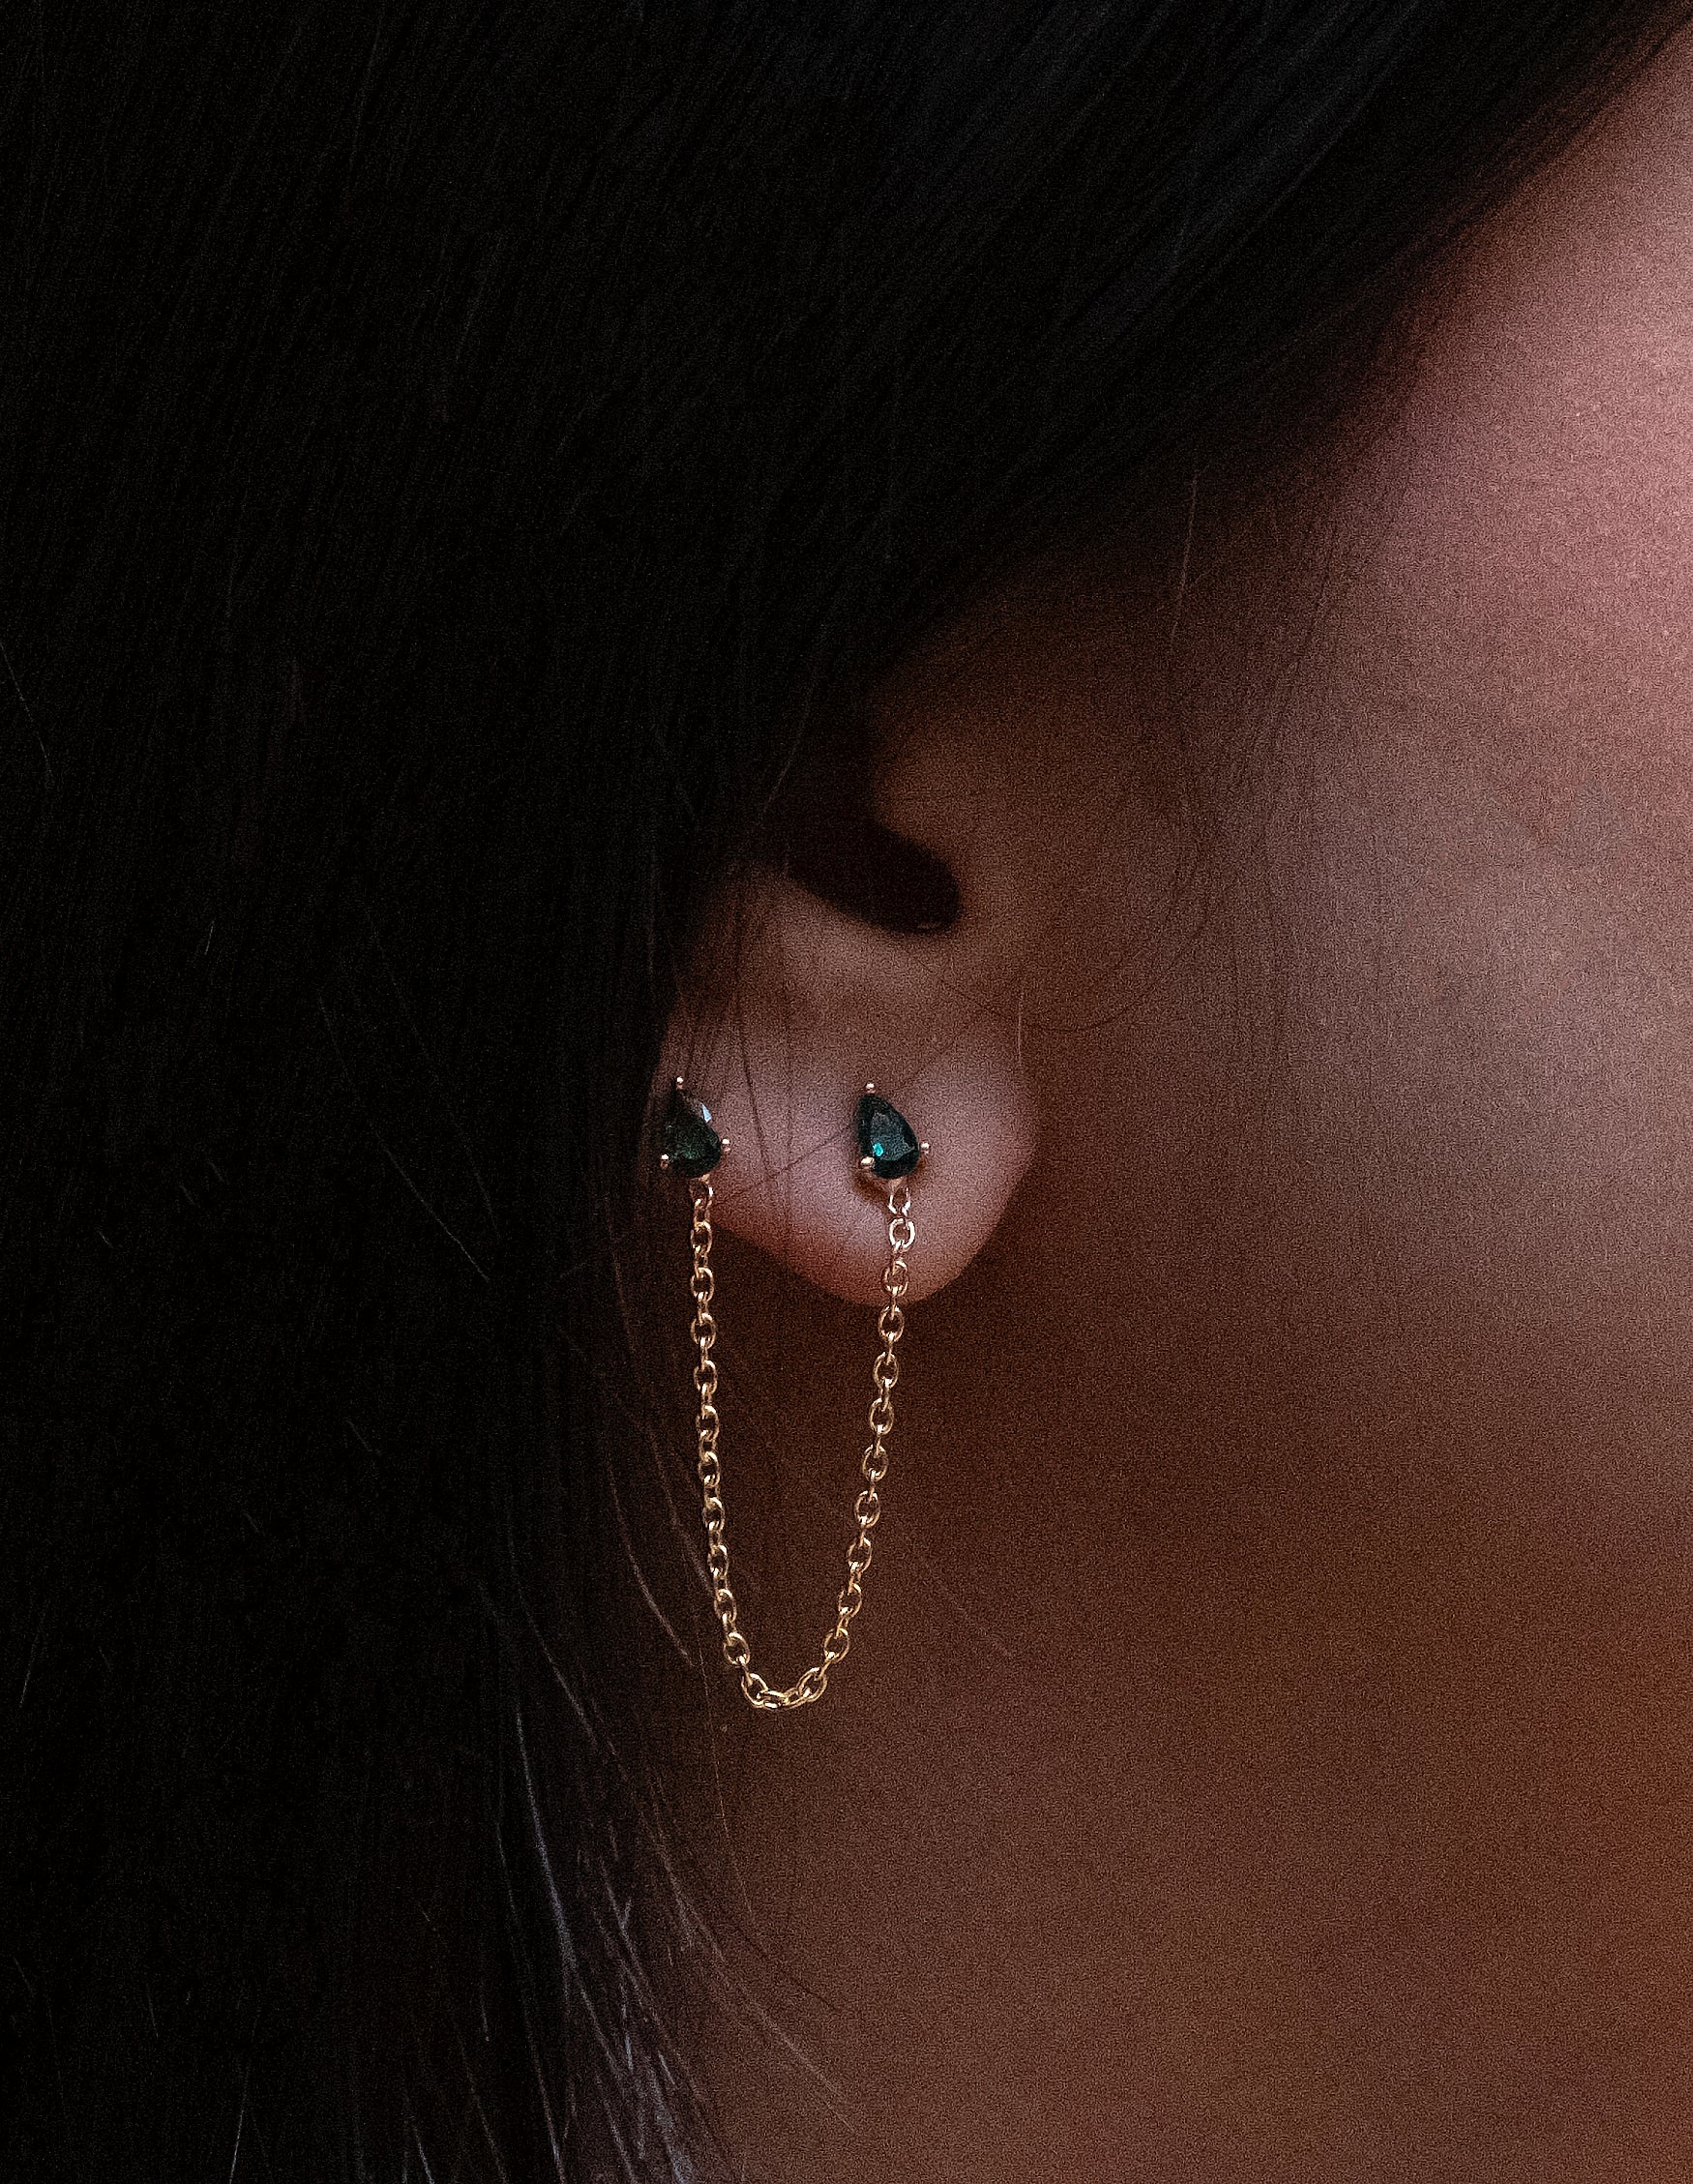 Buy Tiny Diamond Stud Earrings in 14k Gold, 3mm Black Diamond Earrings,  Minimalist Jewelry, Gift for Her Online in India - Etsy